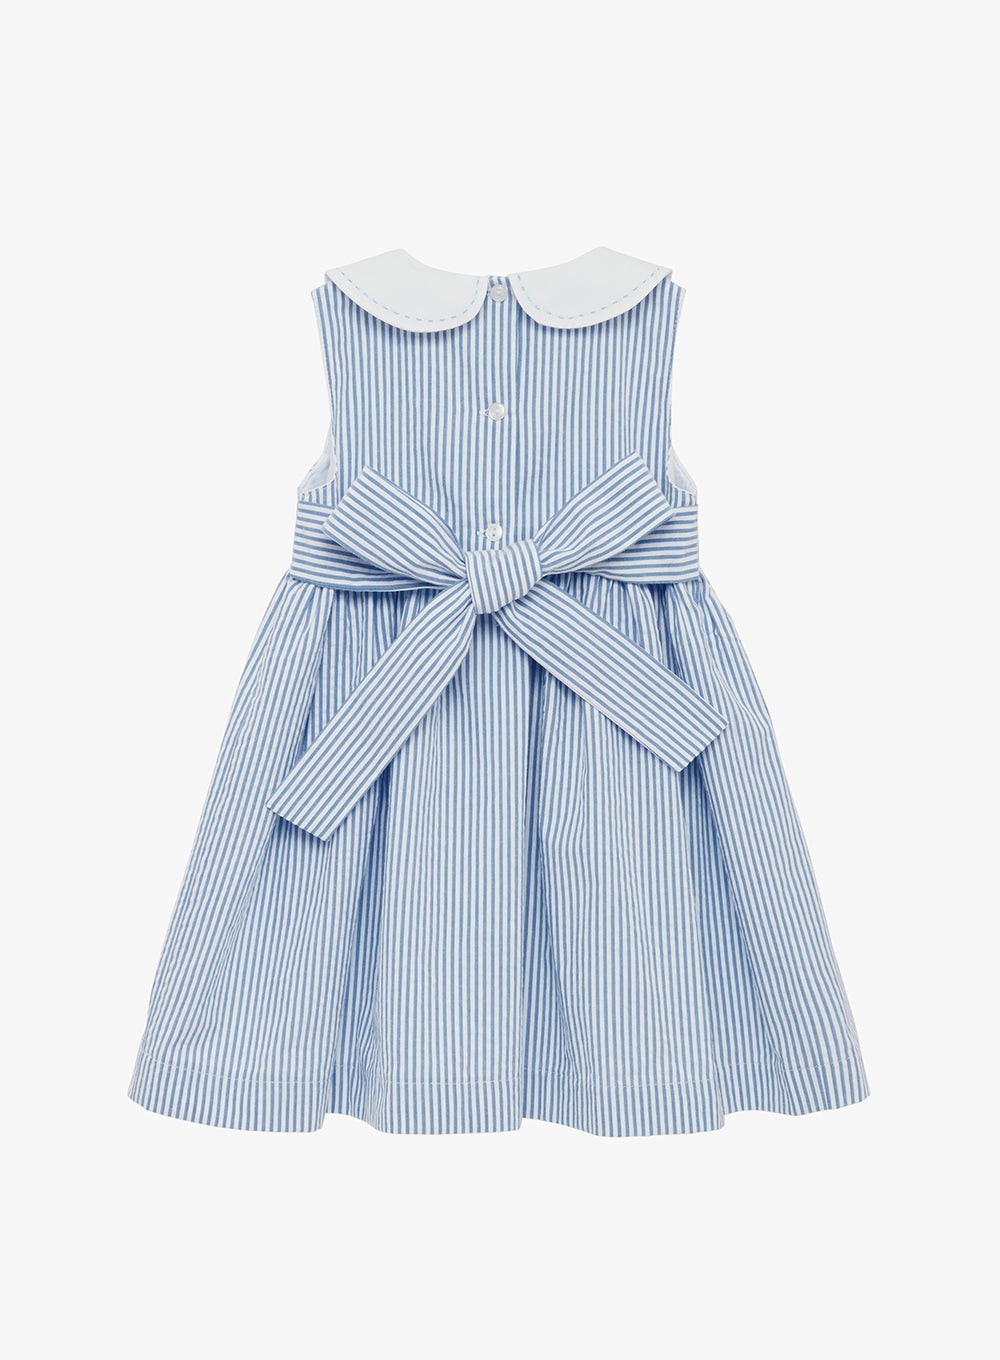 Confiture Dress Little Leonore Smocked Dress in Blue Stripe